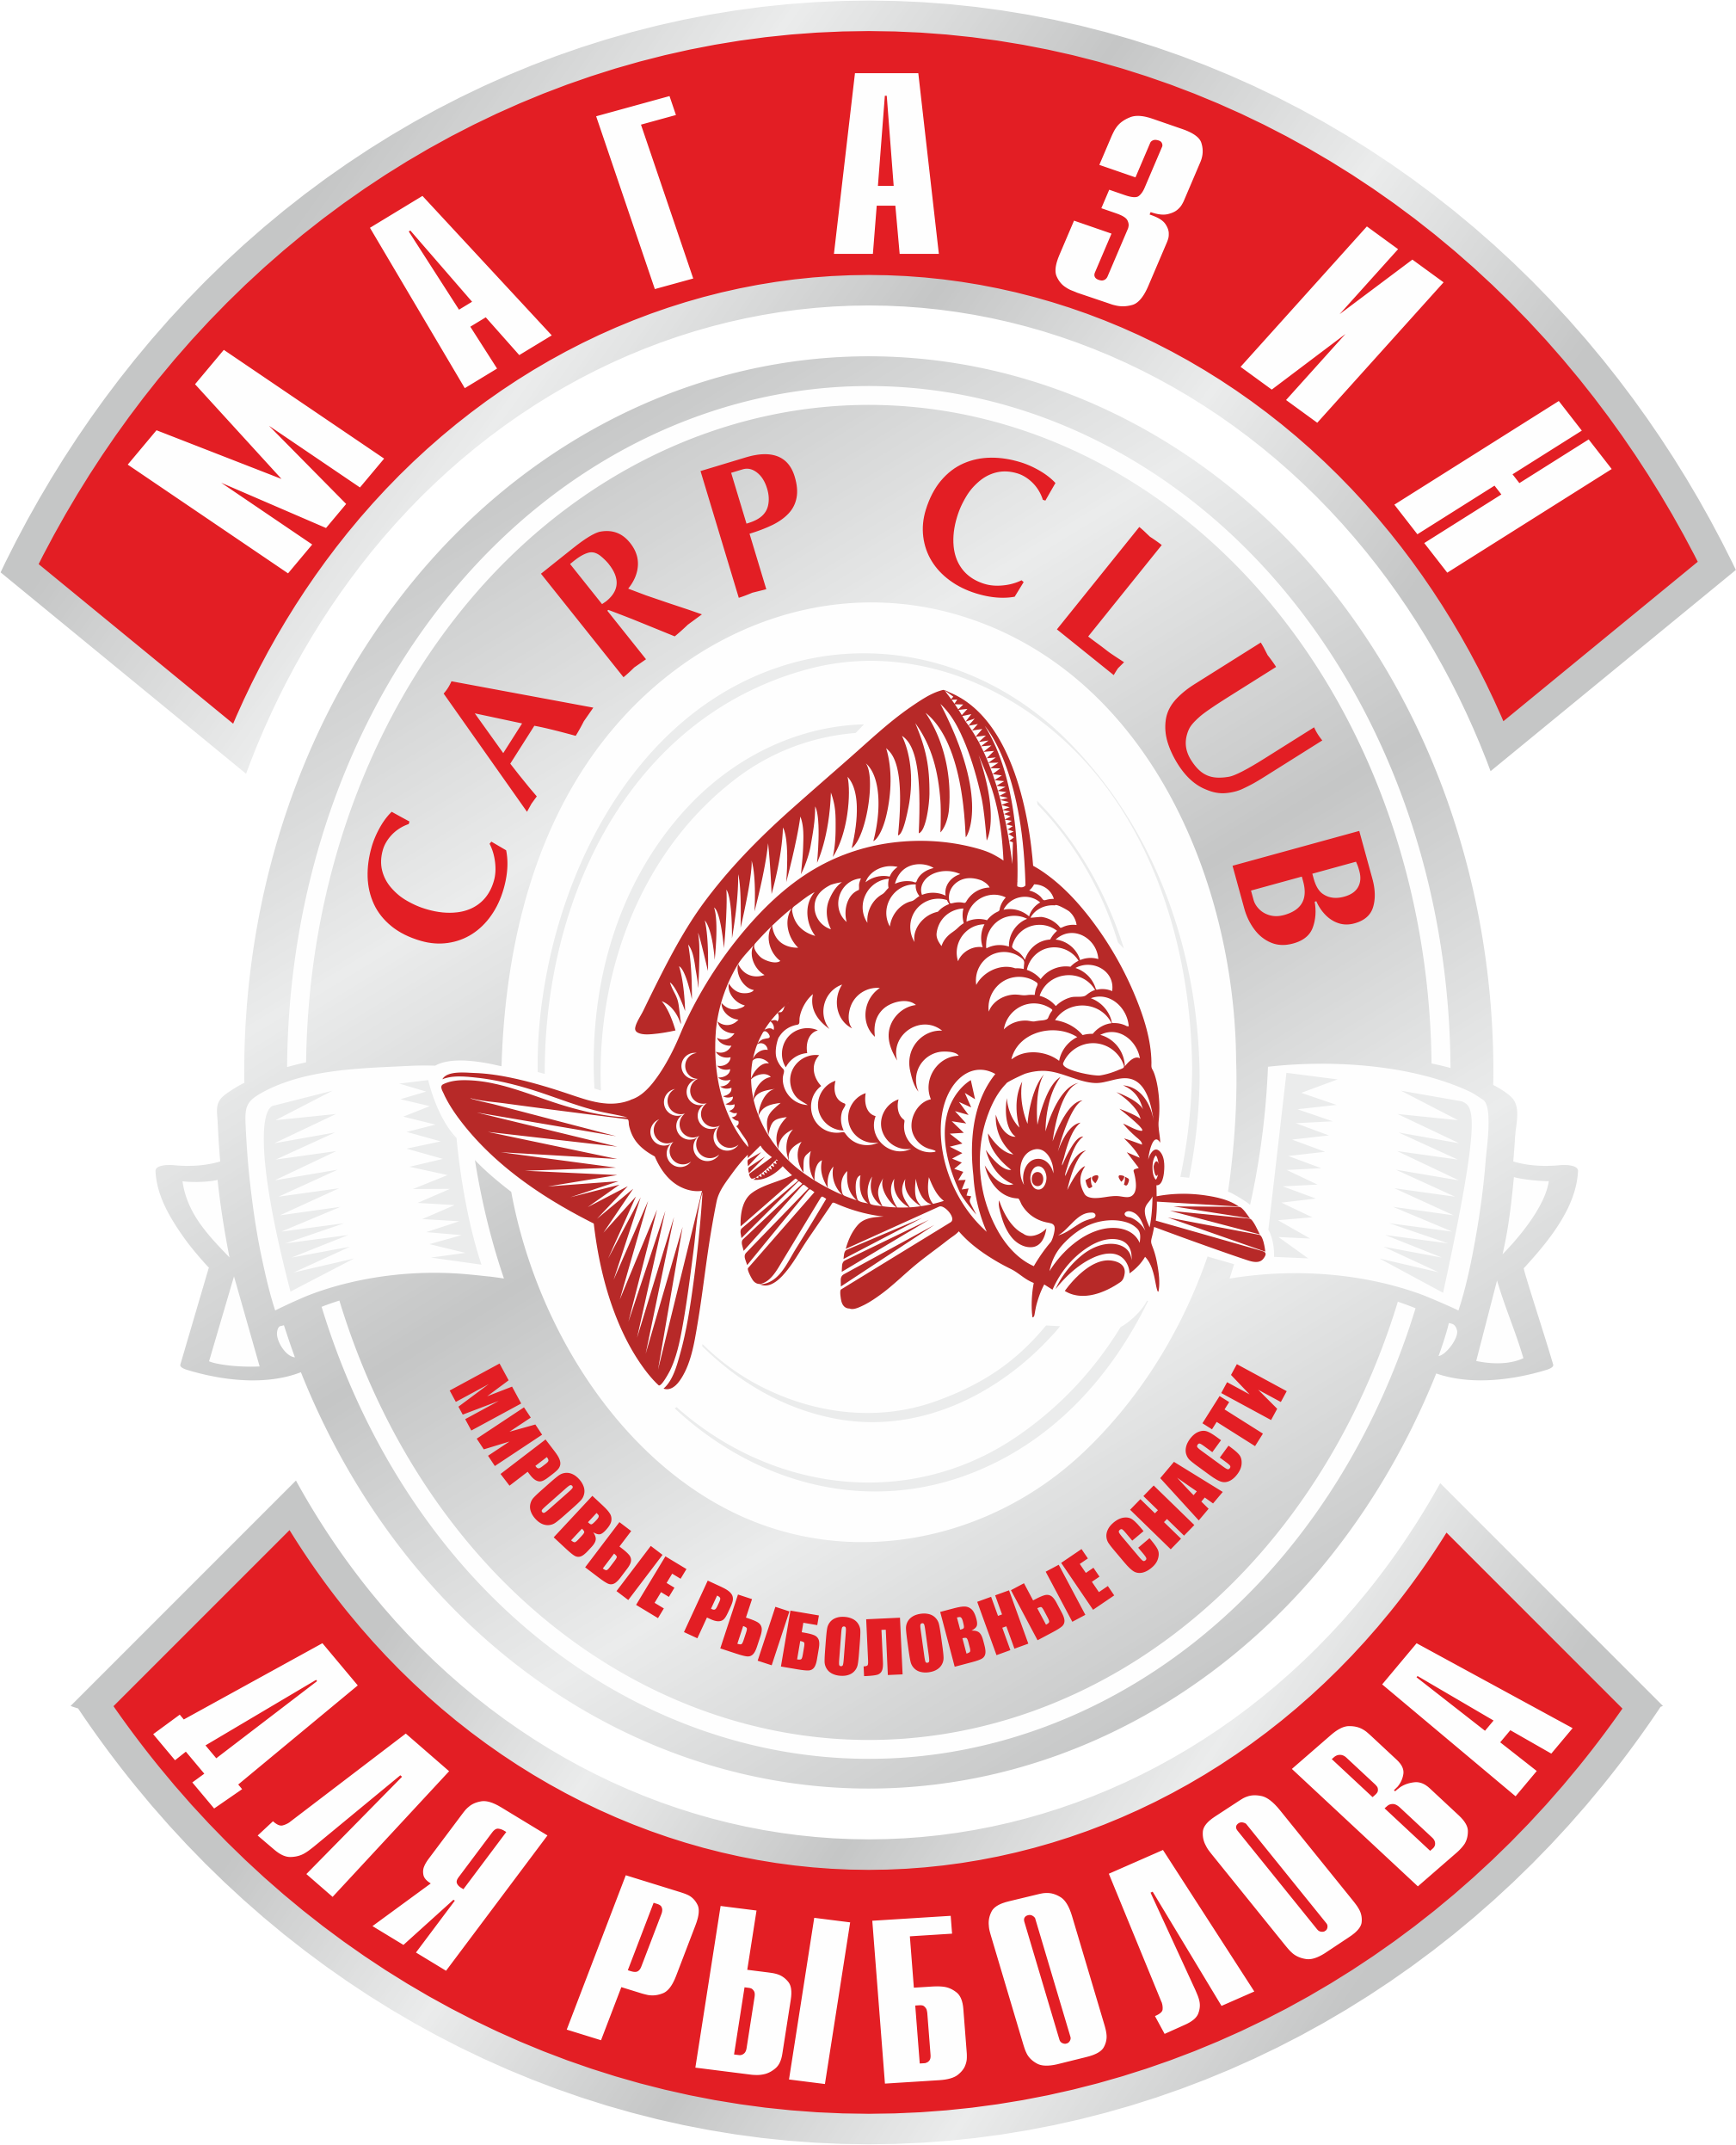 Shop for the angler Carp Club